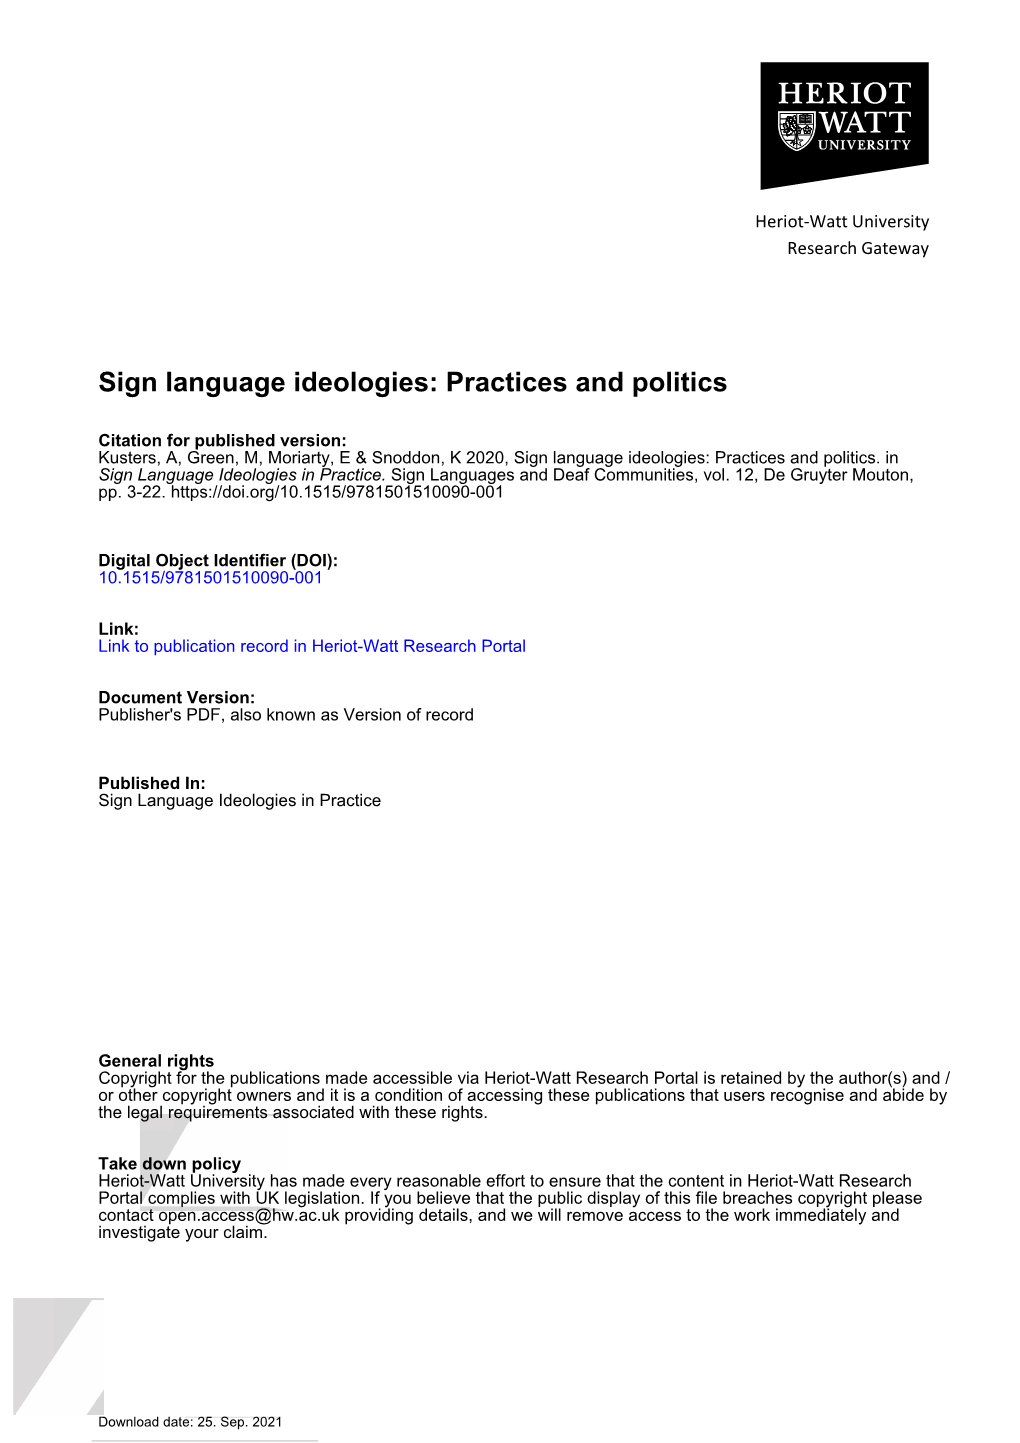 Sign Language Ideologies: Practices and Politics